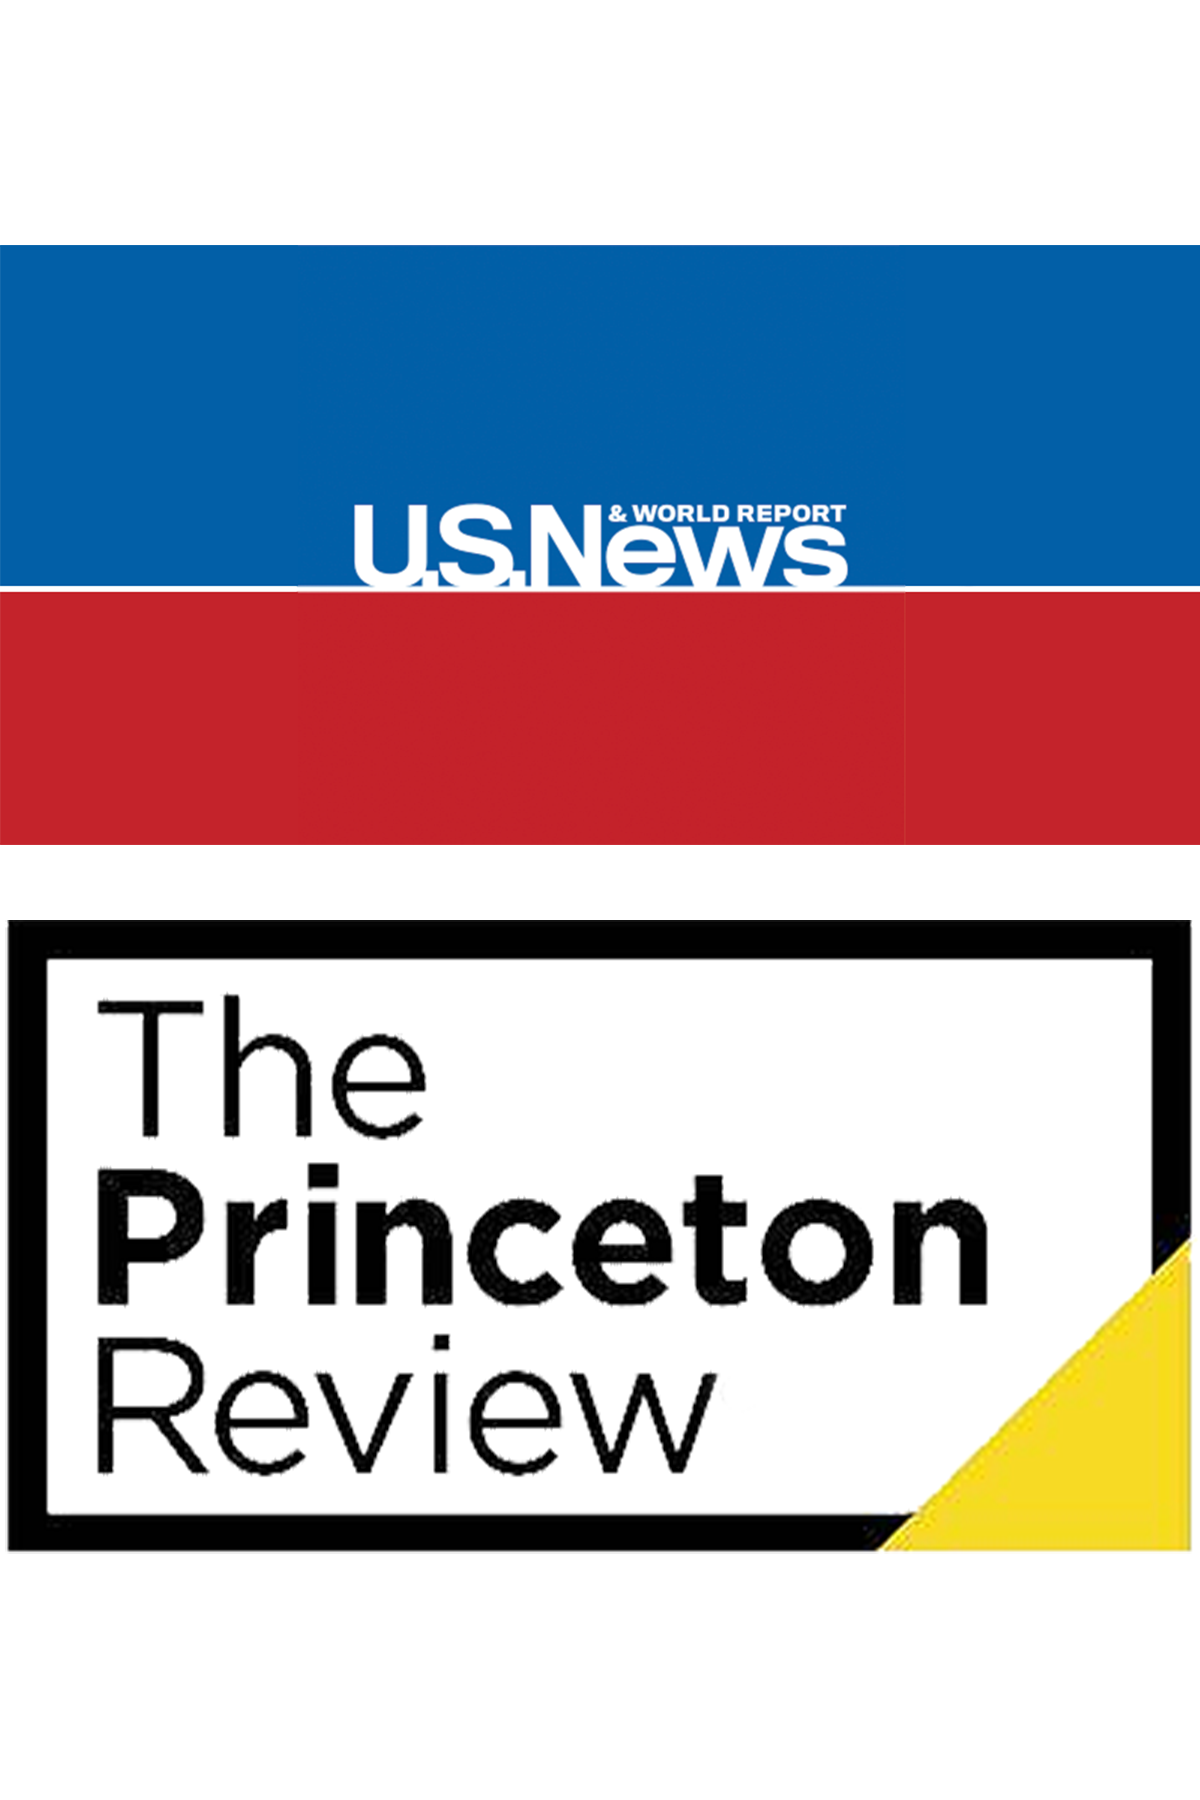 US News and Princeton Review logos